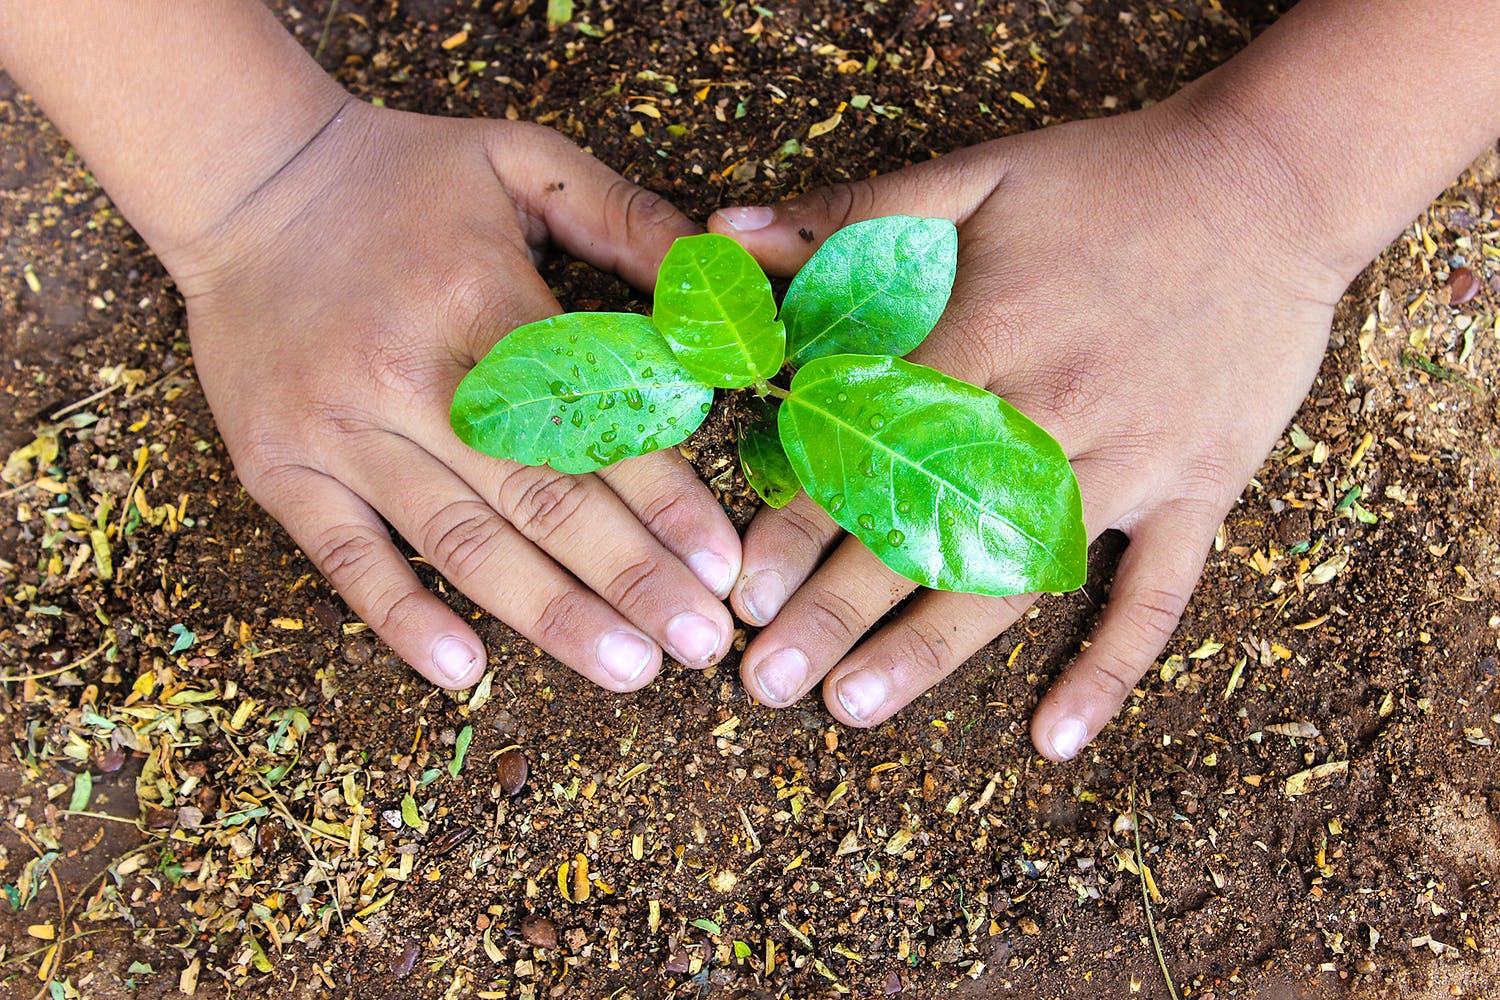 Soil,Leaf,Green,Plant,Hand,Flower,Adaptation,Herb,Arbor day,Annual plant